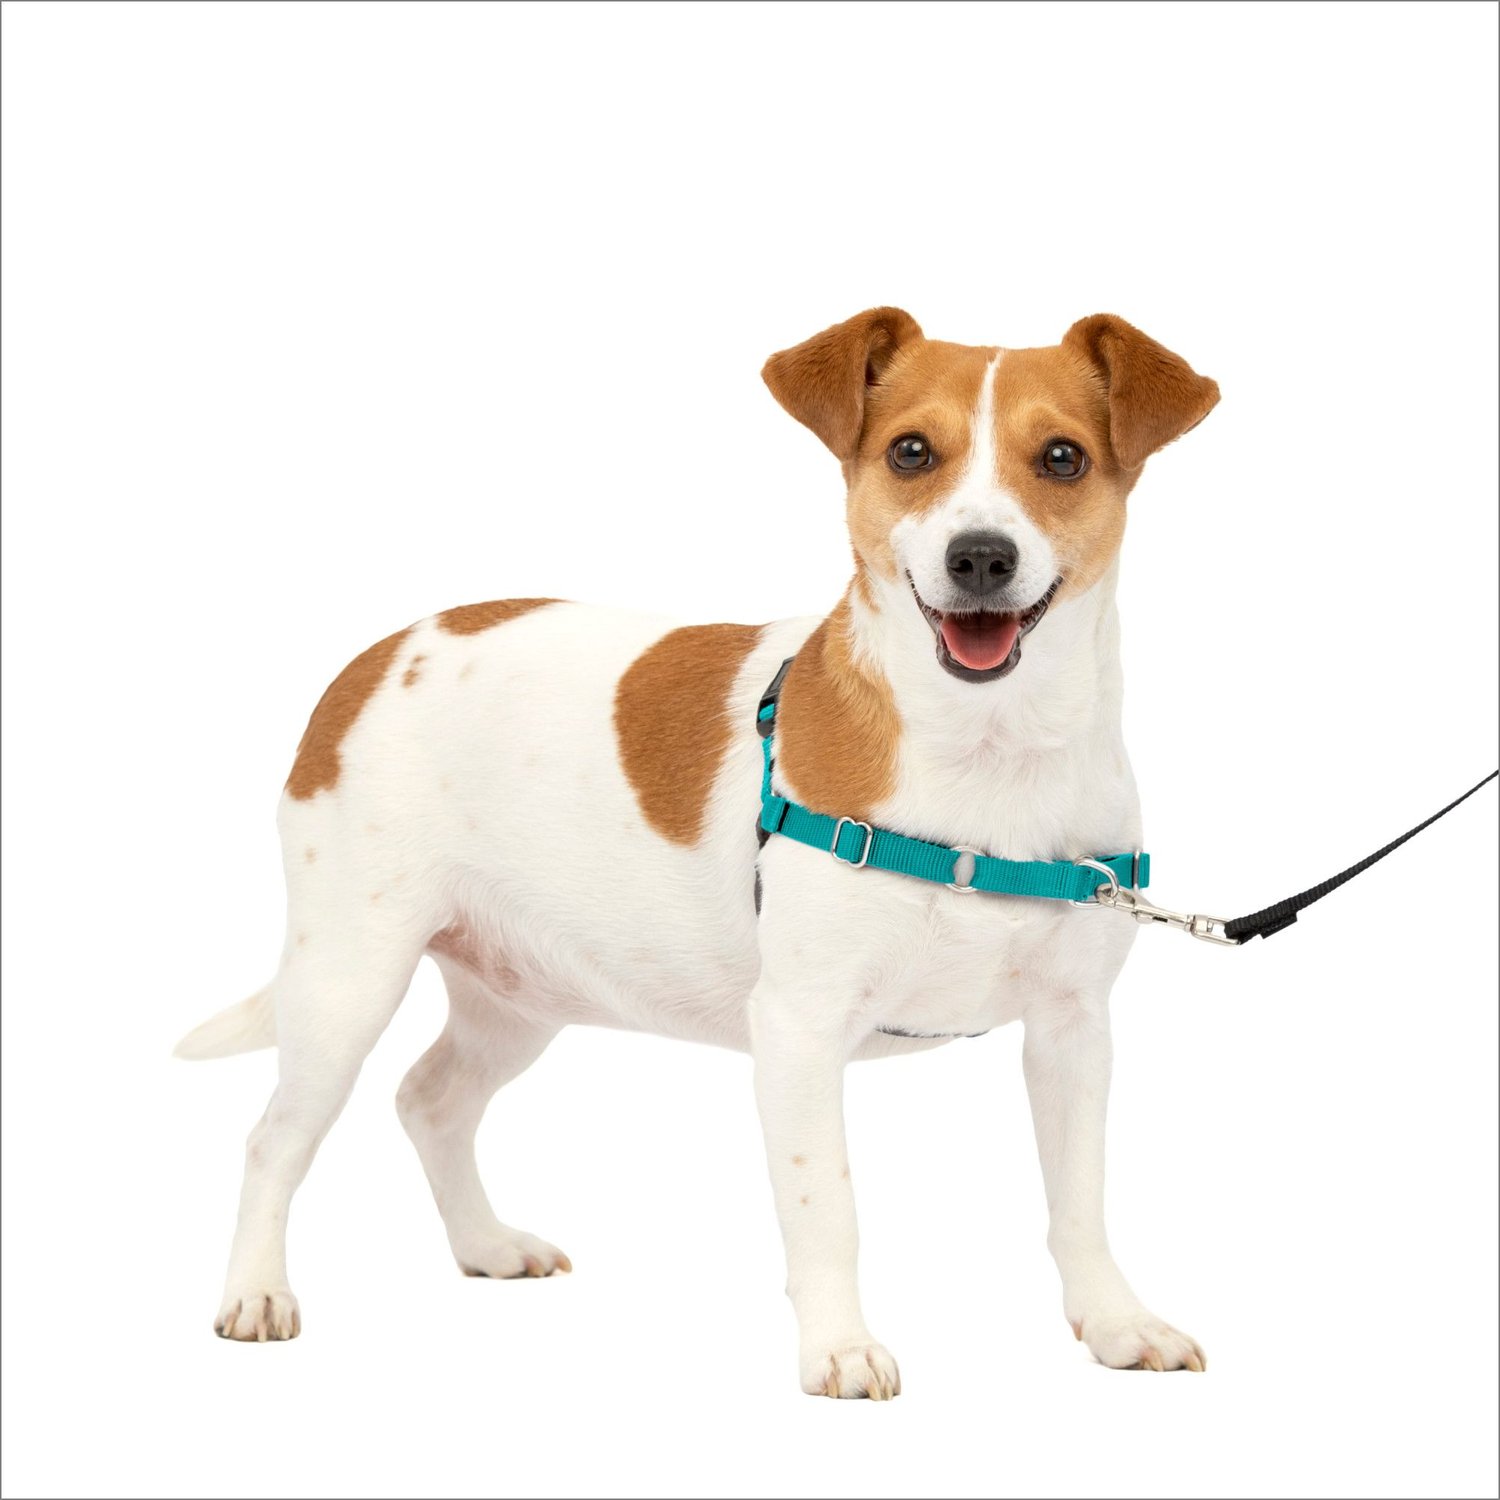 petsafe easy walk dog harness